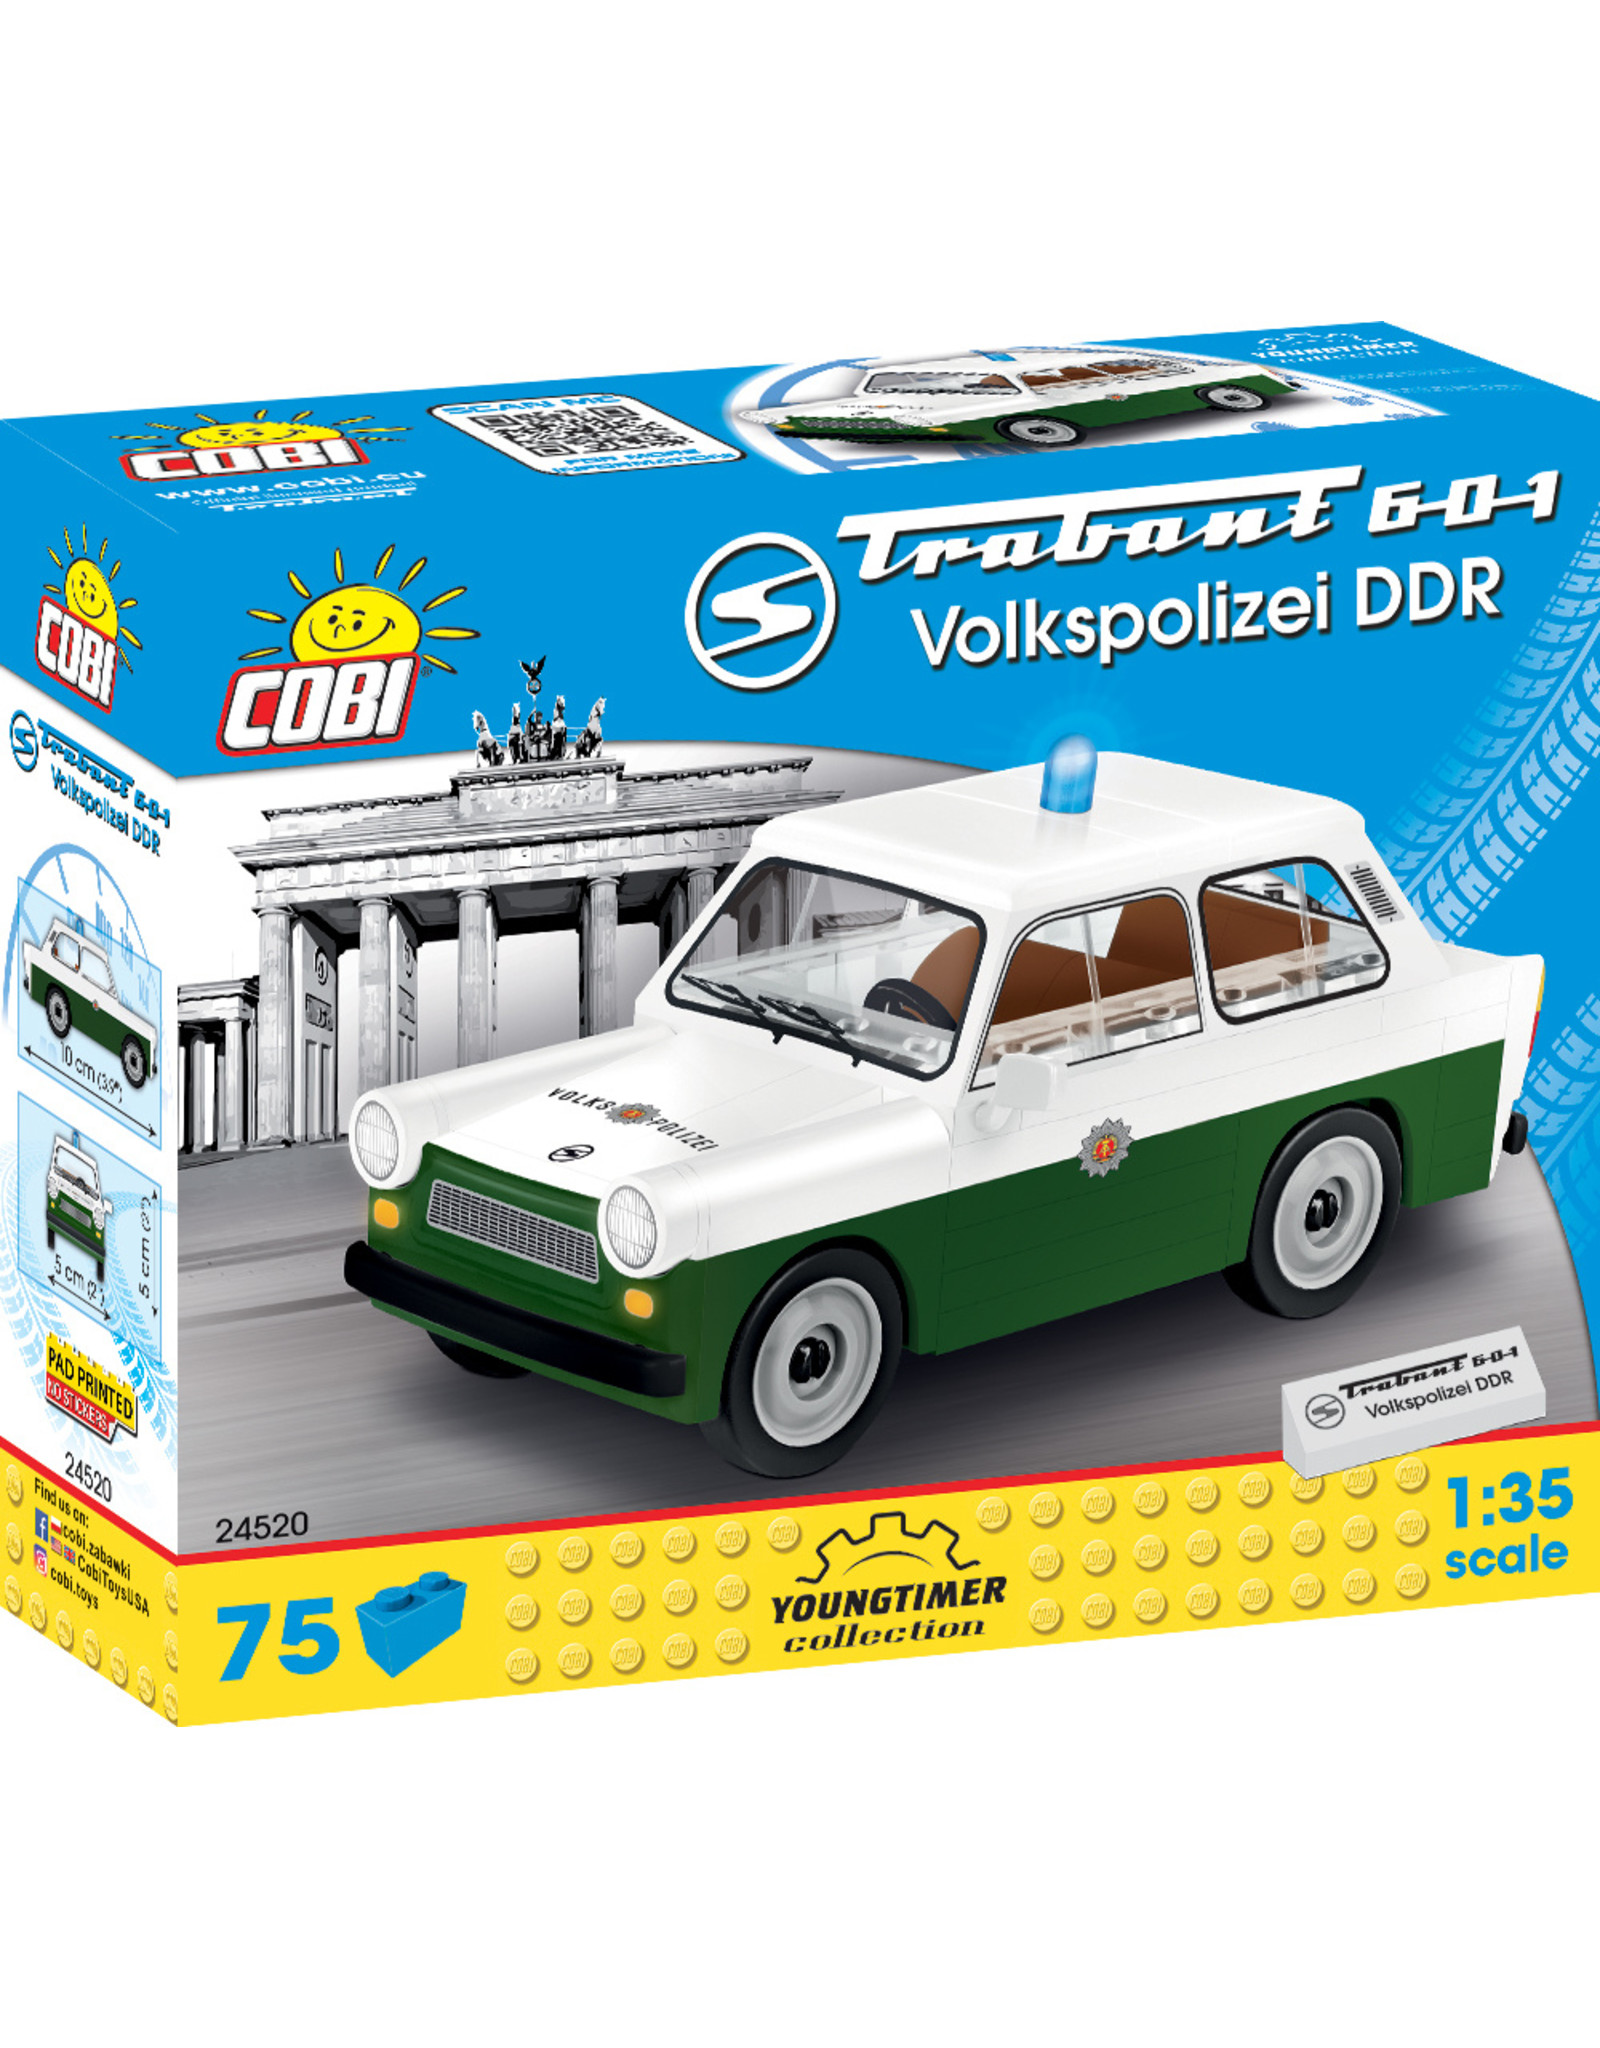 COBI COBI 24520 - Trabant 601 Volkspolizei DDR